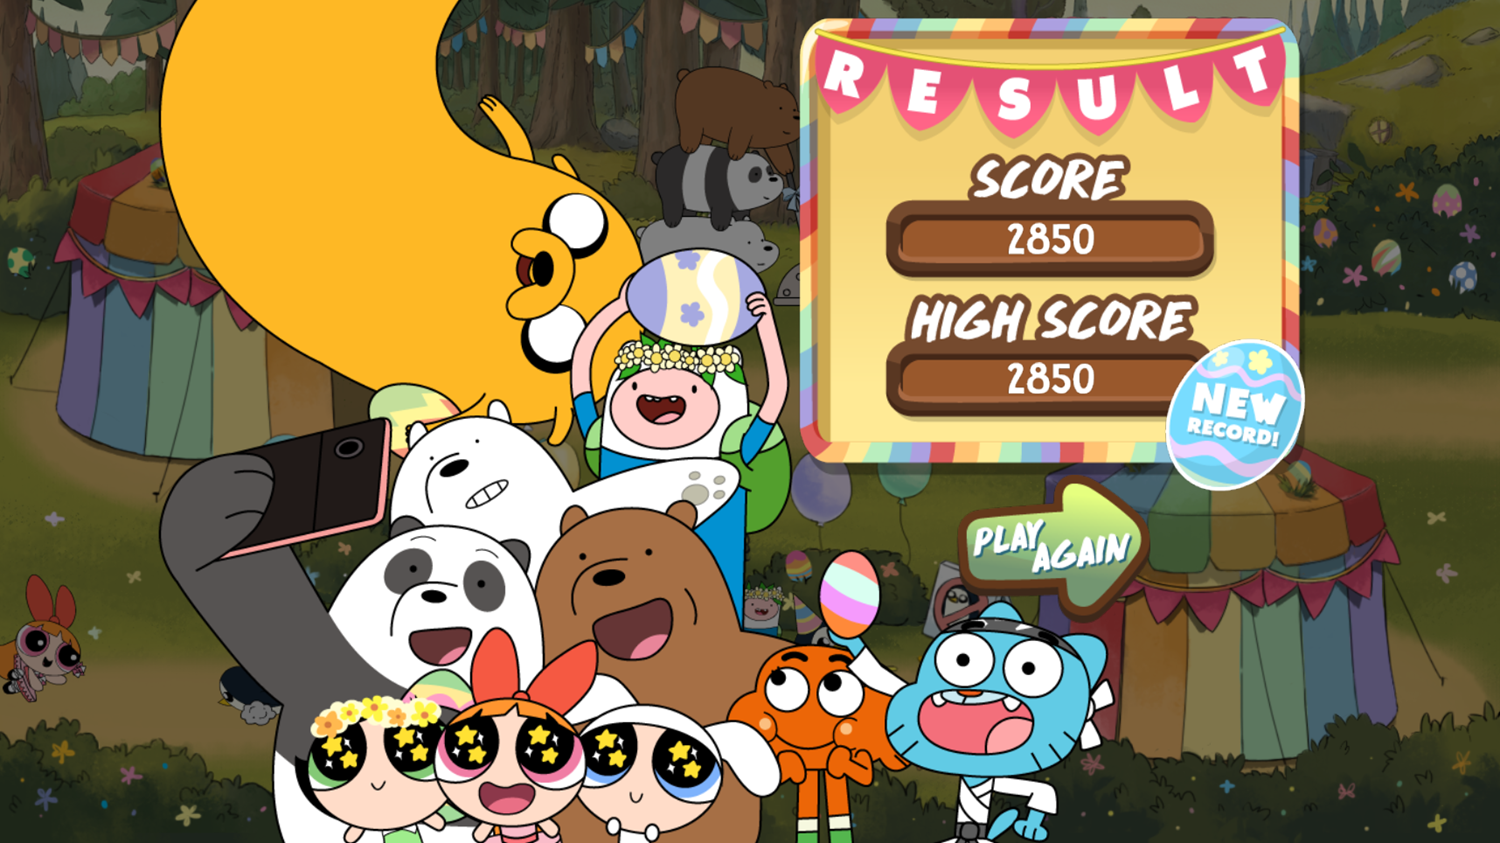 Eager Egg Hunt Game Score Screenshot.